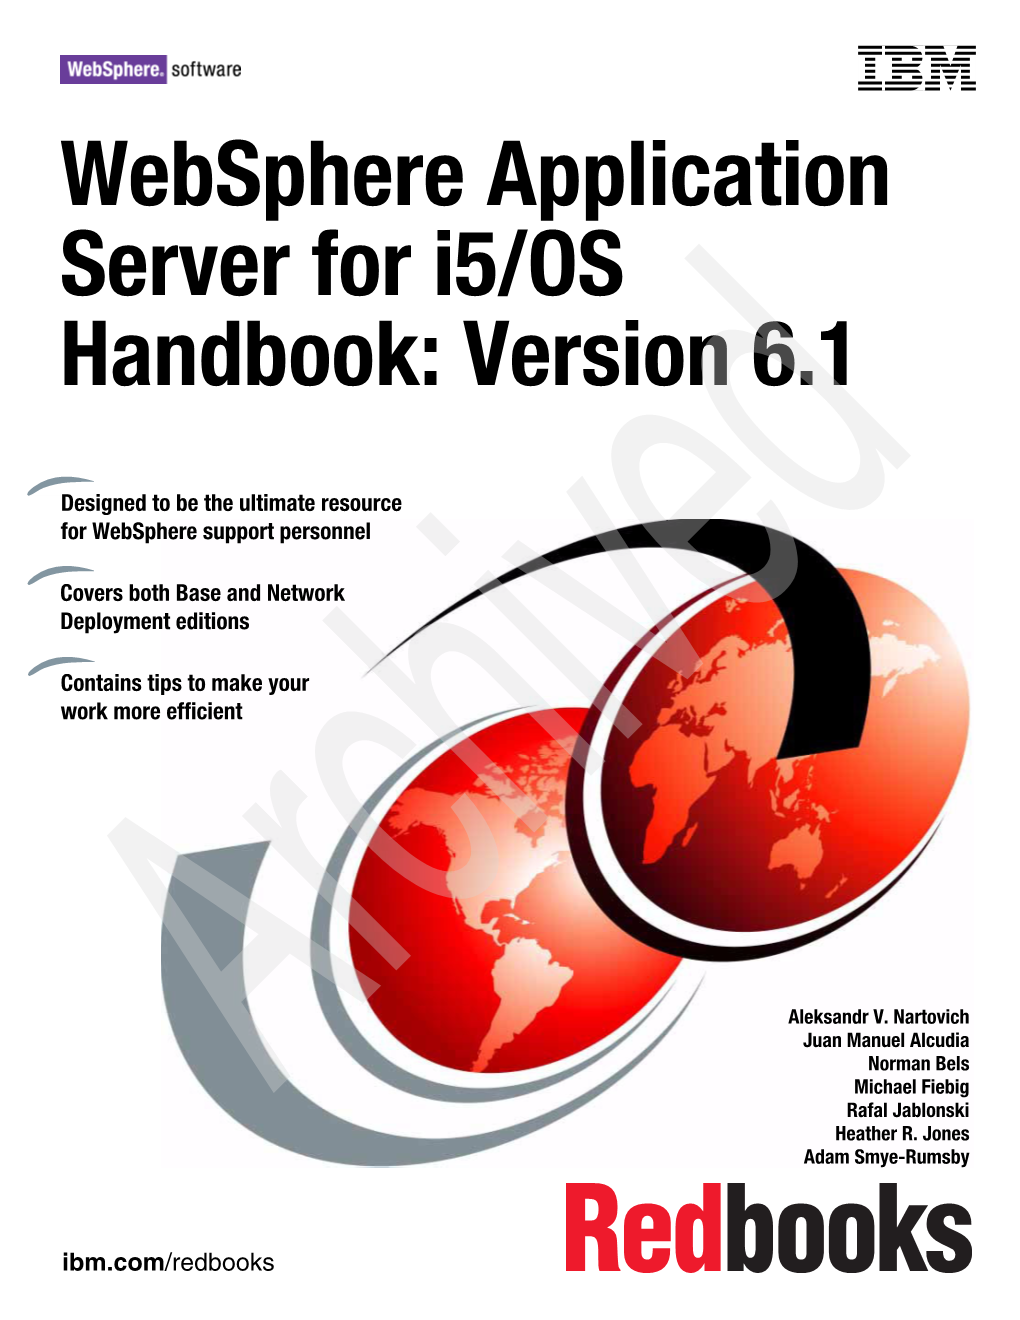 Websphere Application Server for I5/OS Handbook: Version 6.1 March 2008